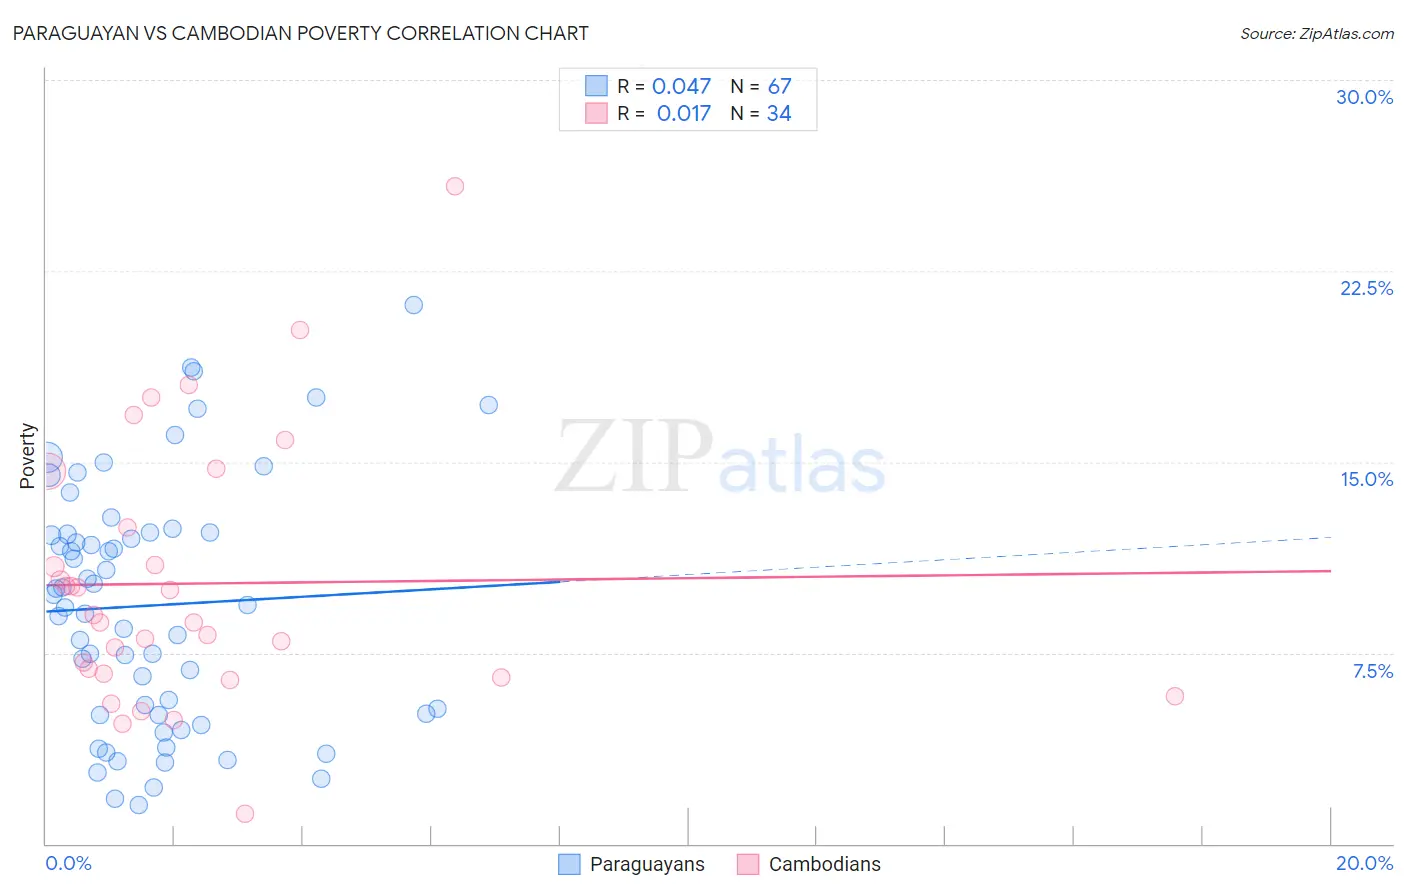 Paraguayan vs Cambodian Poverty